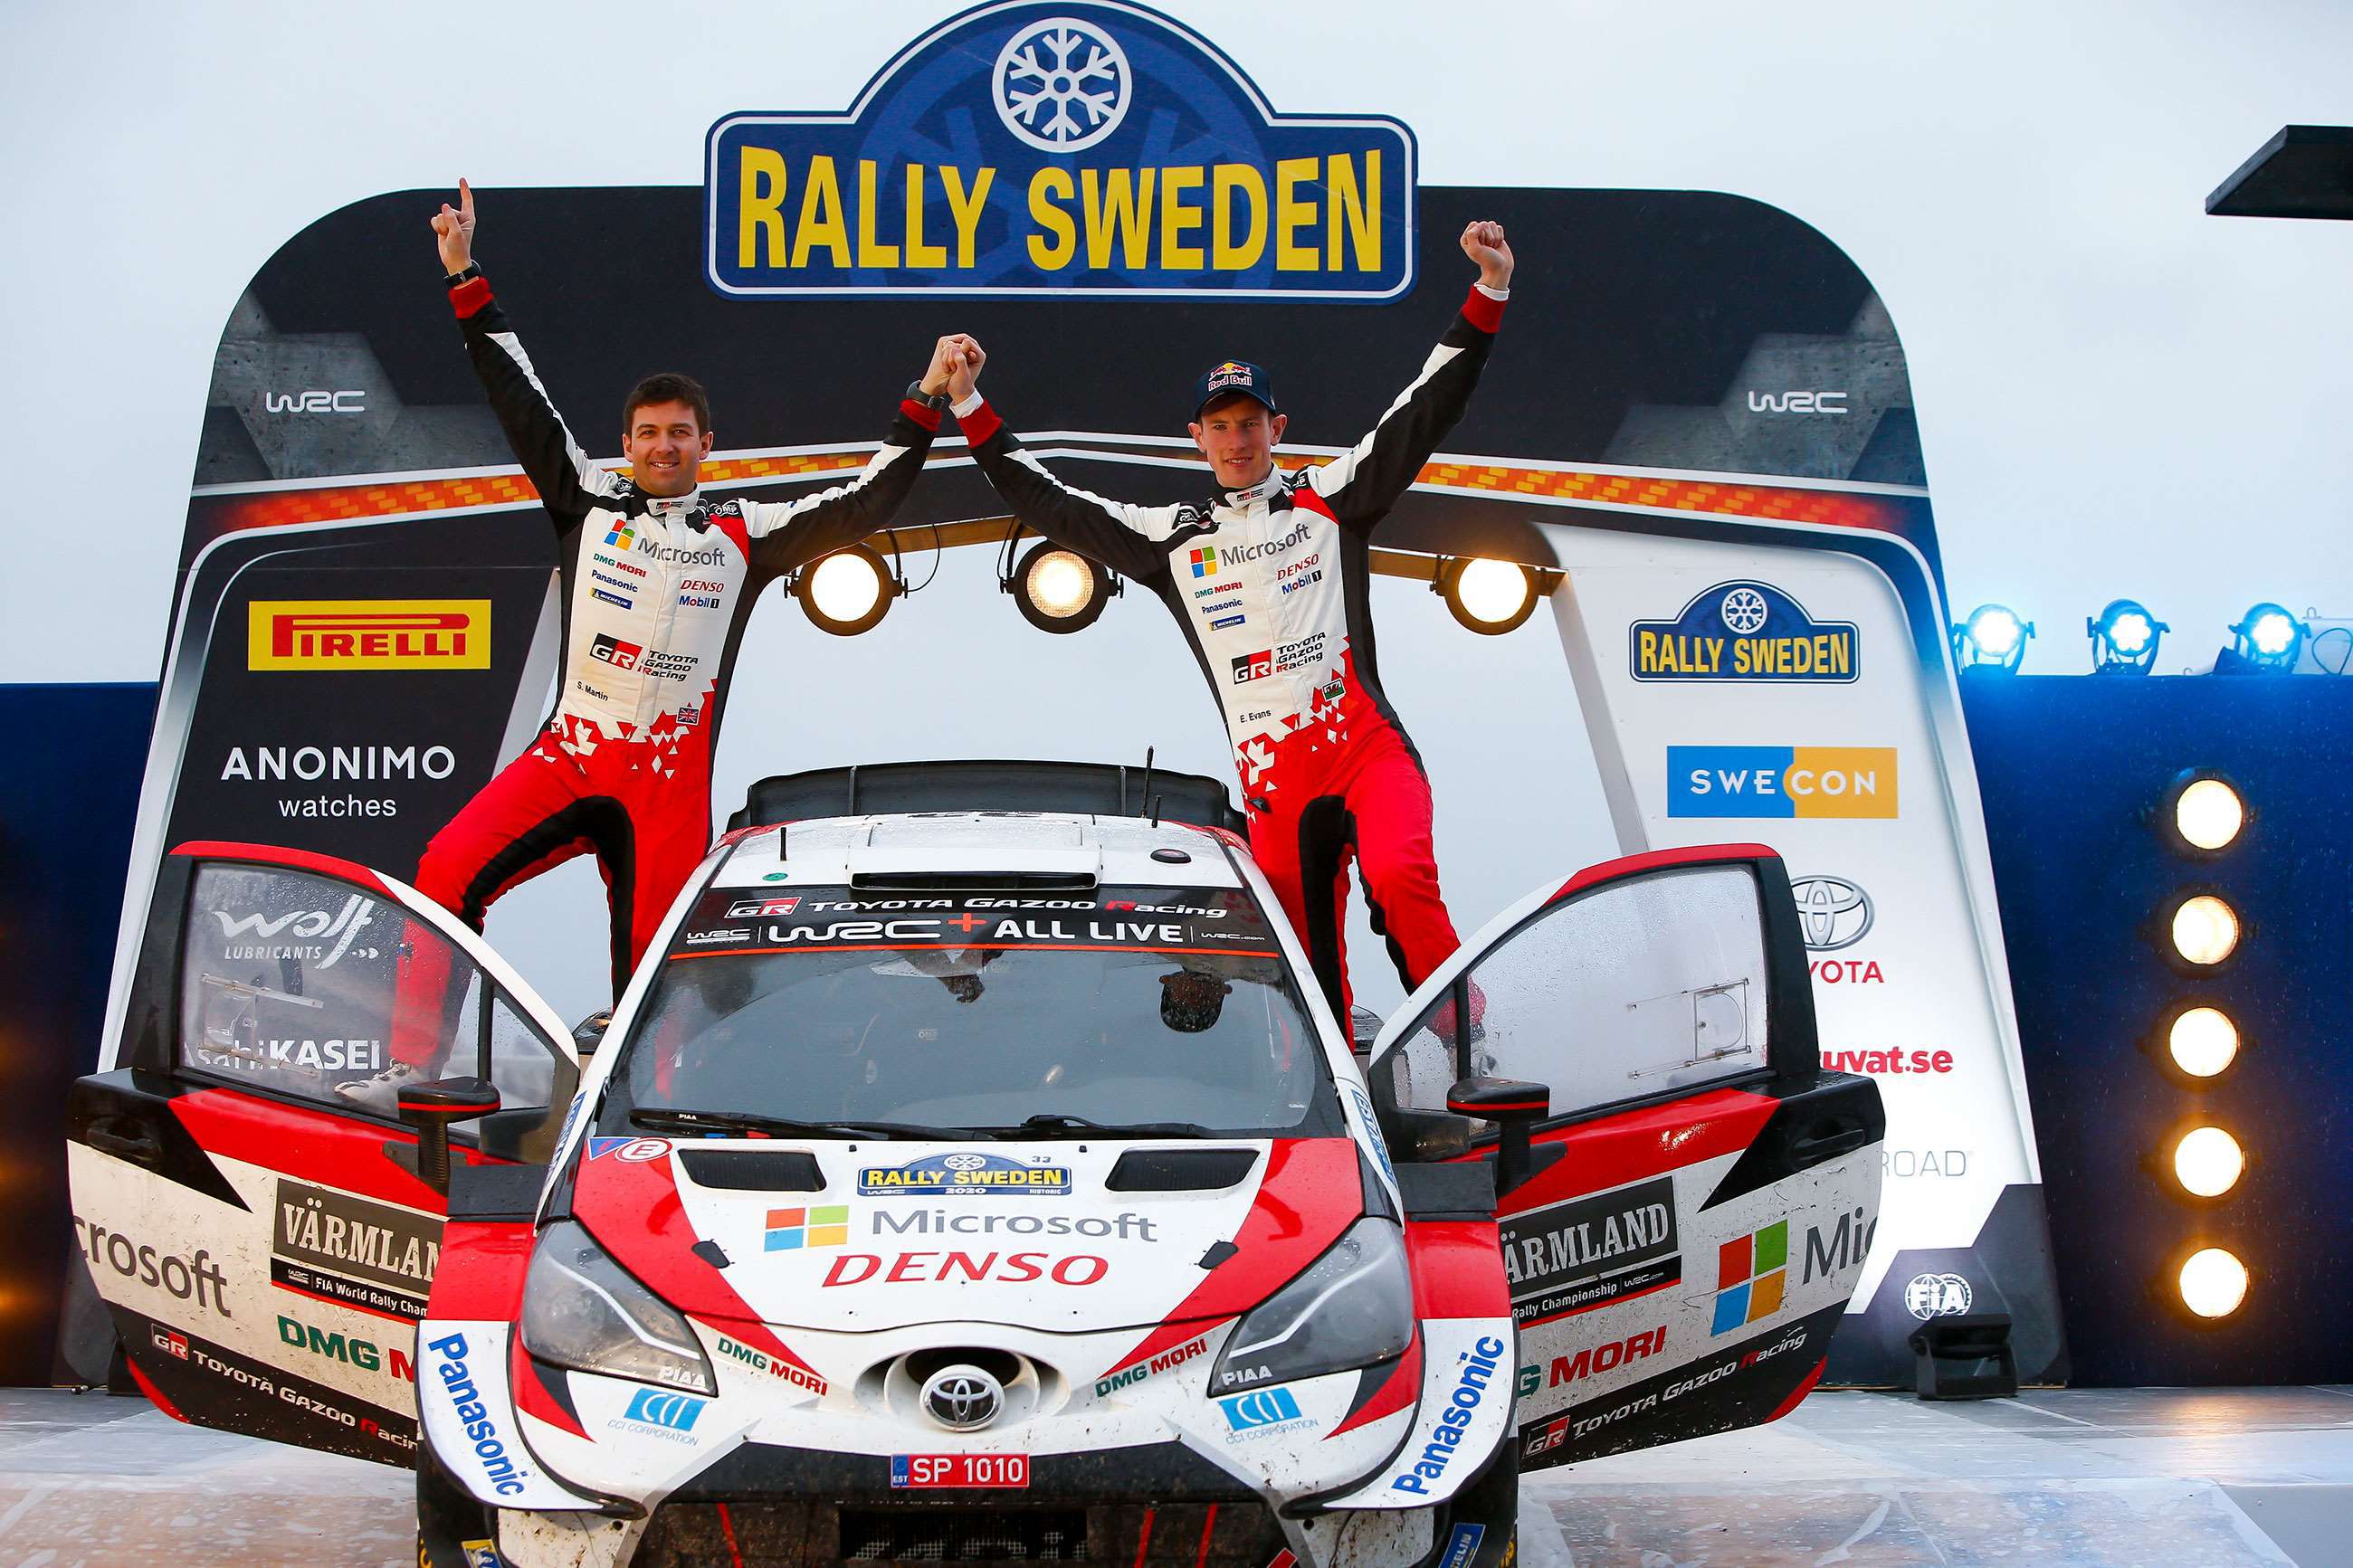 wrc-2020-rally-sweden-elfyn-evans-wins-scott-martin-toyota-mcklein-motorsport-images-goodwood-17022020.jpg